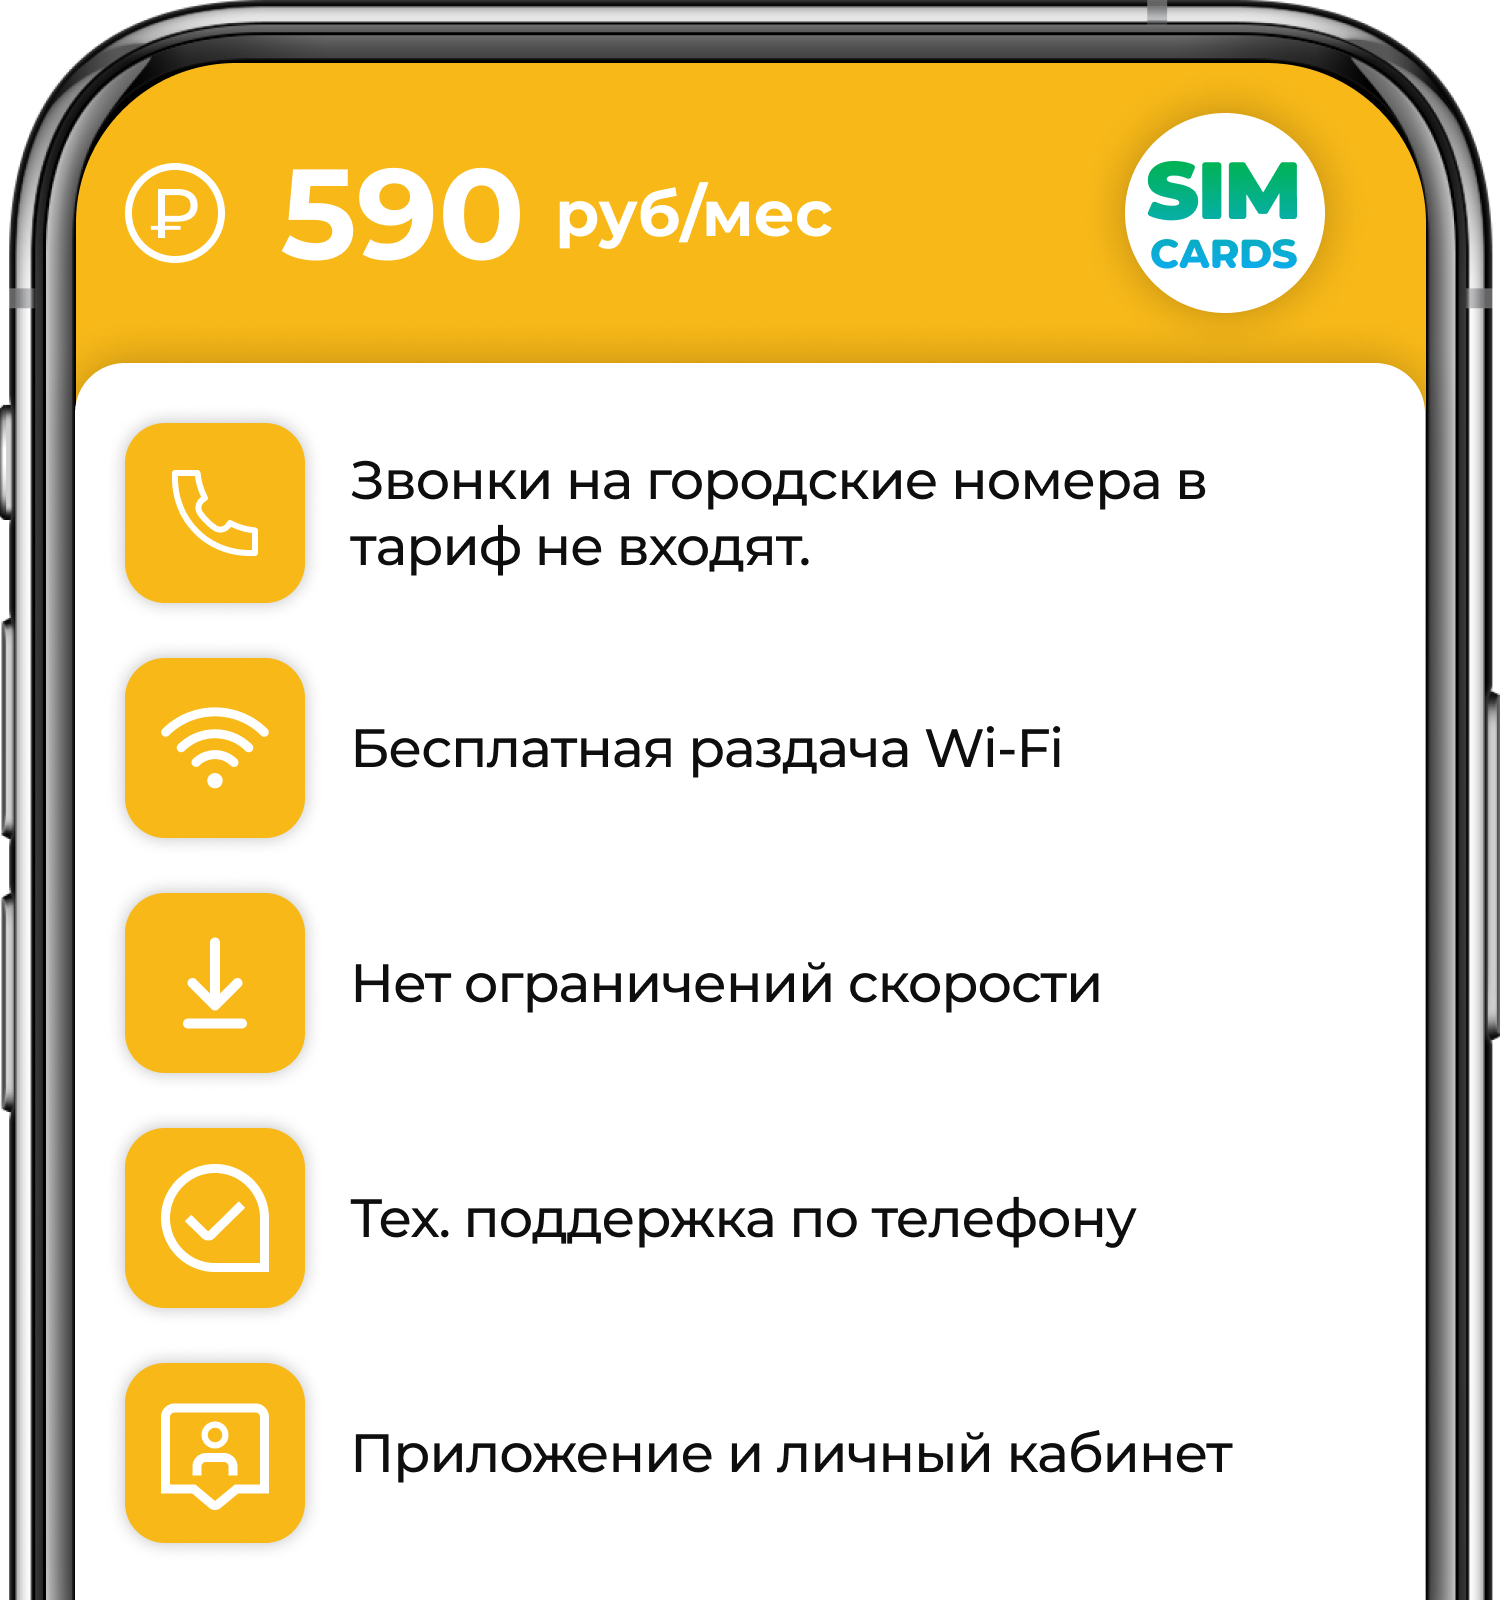 SIM-карта 600 минут и 40ГБ интернет и 300SMS за 590 руб/мес (2G3G4G) дляартфона